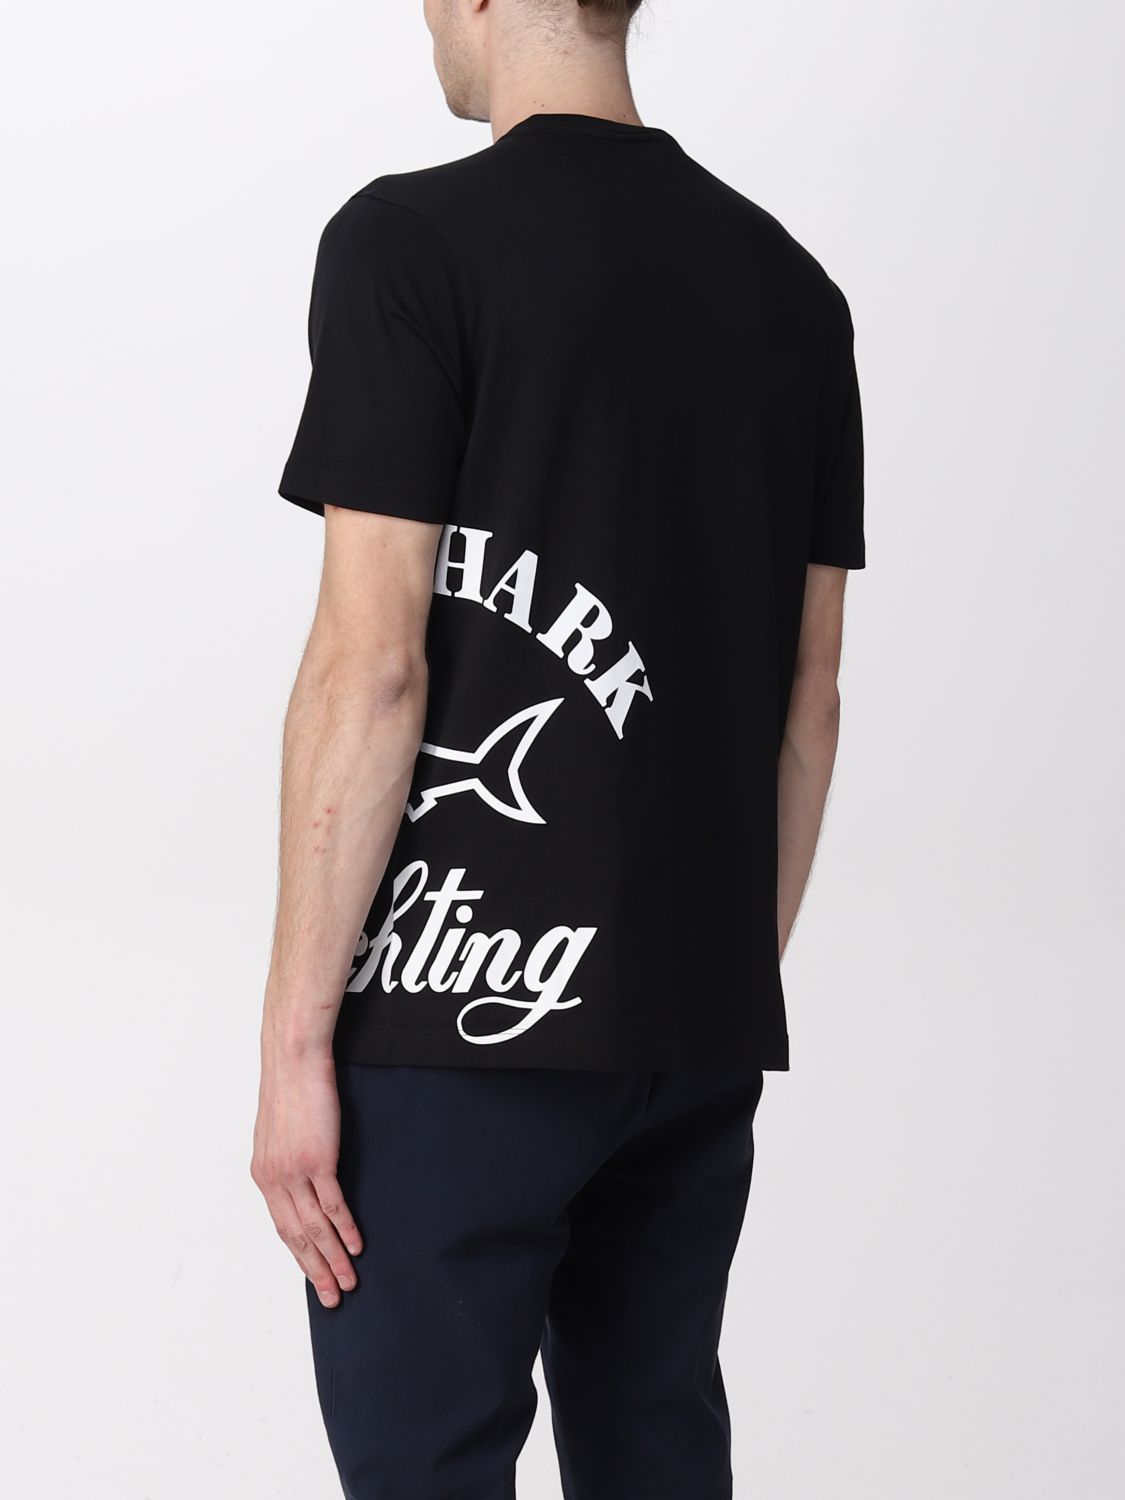 PAUL & SHARK: t-shirt - Black | Paul & Shark t-shirt 22411021 online on GIGLIO.COM